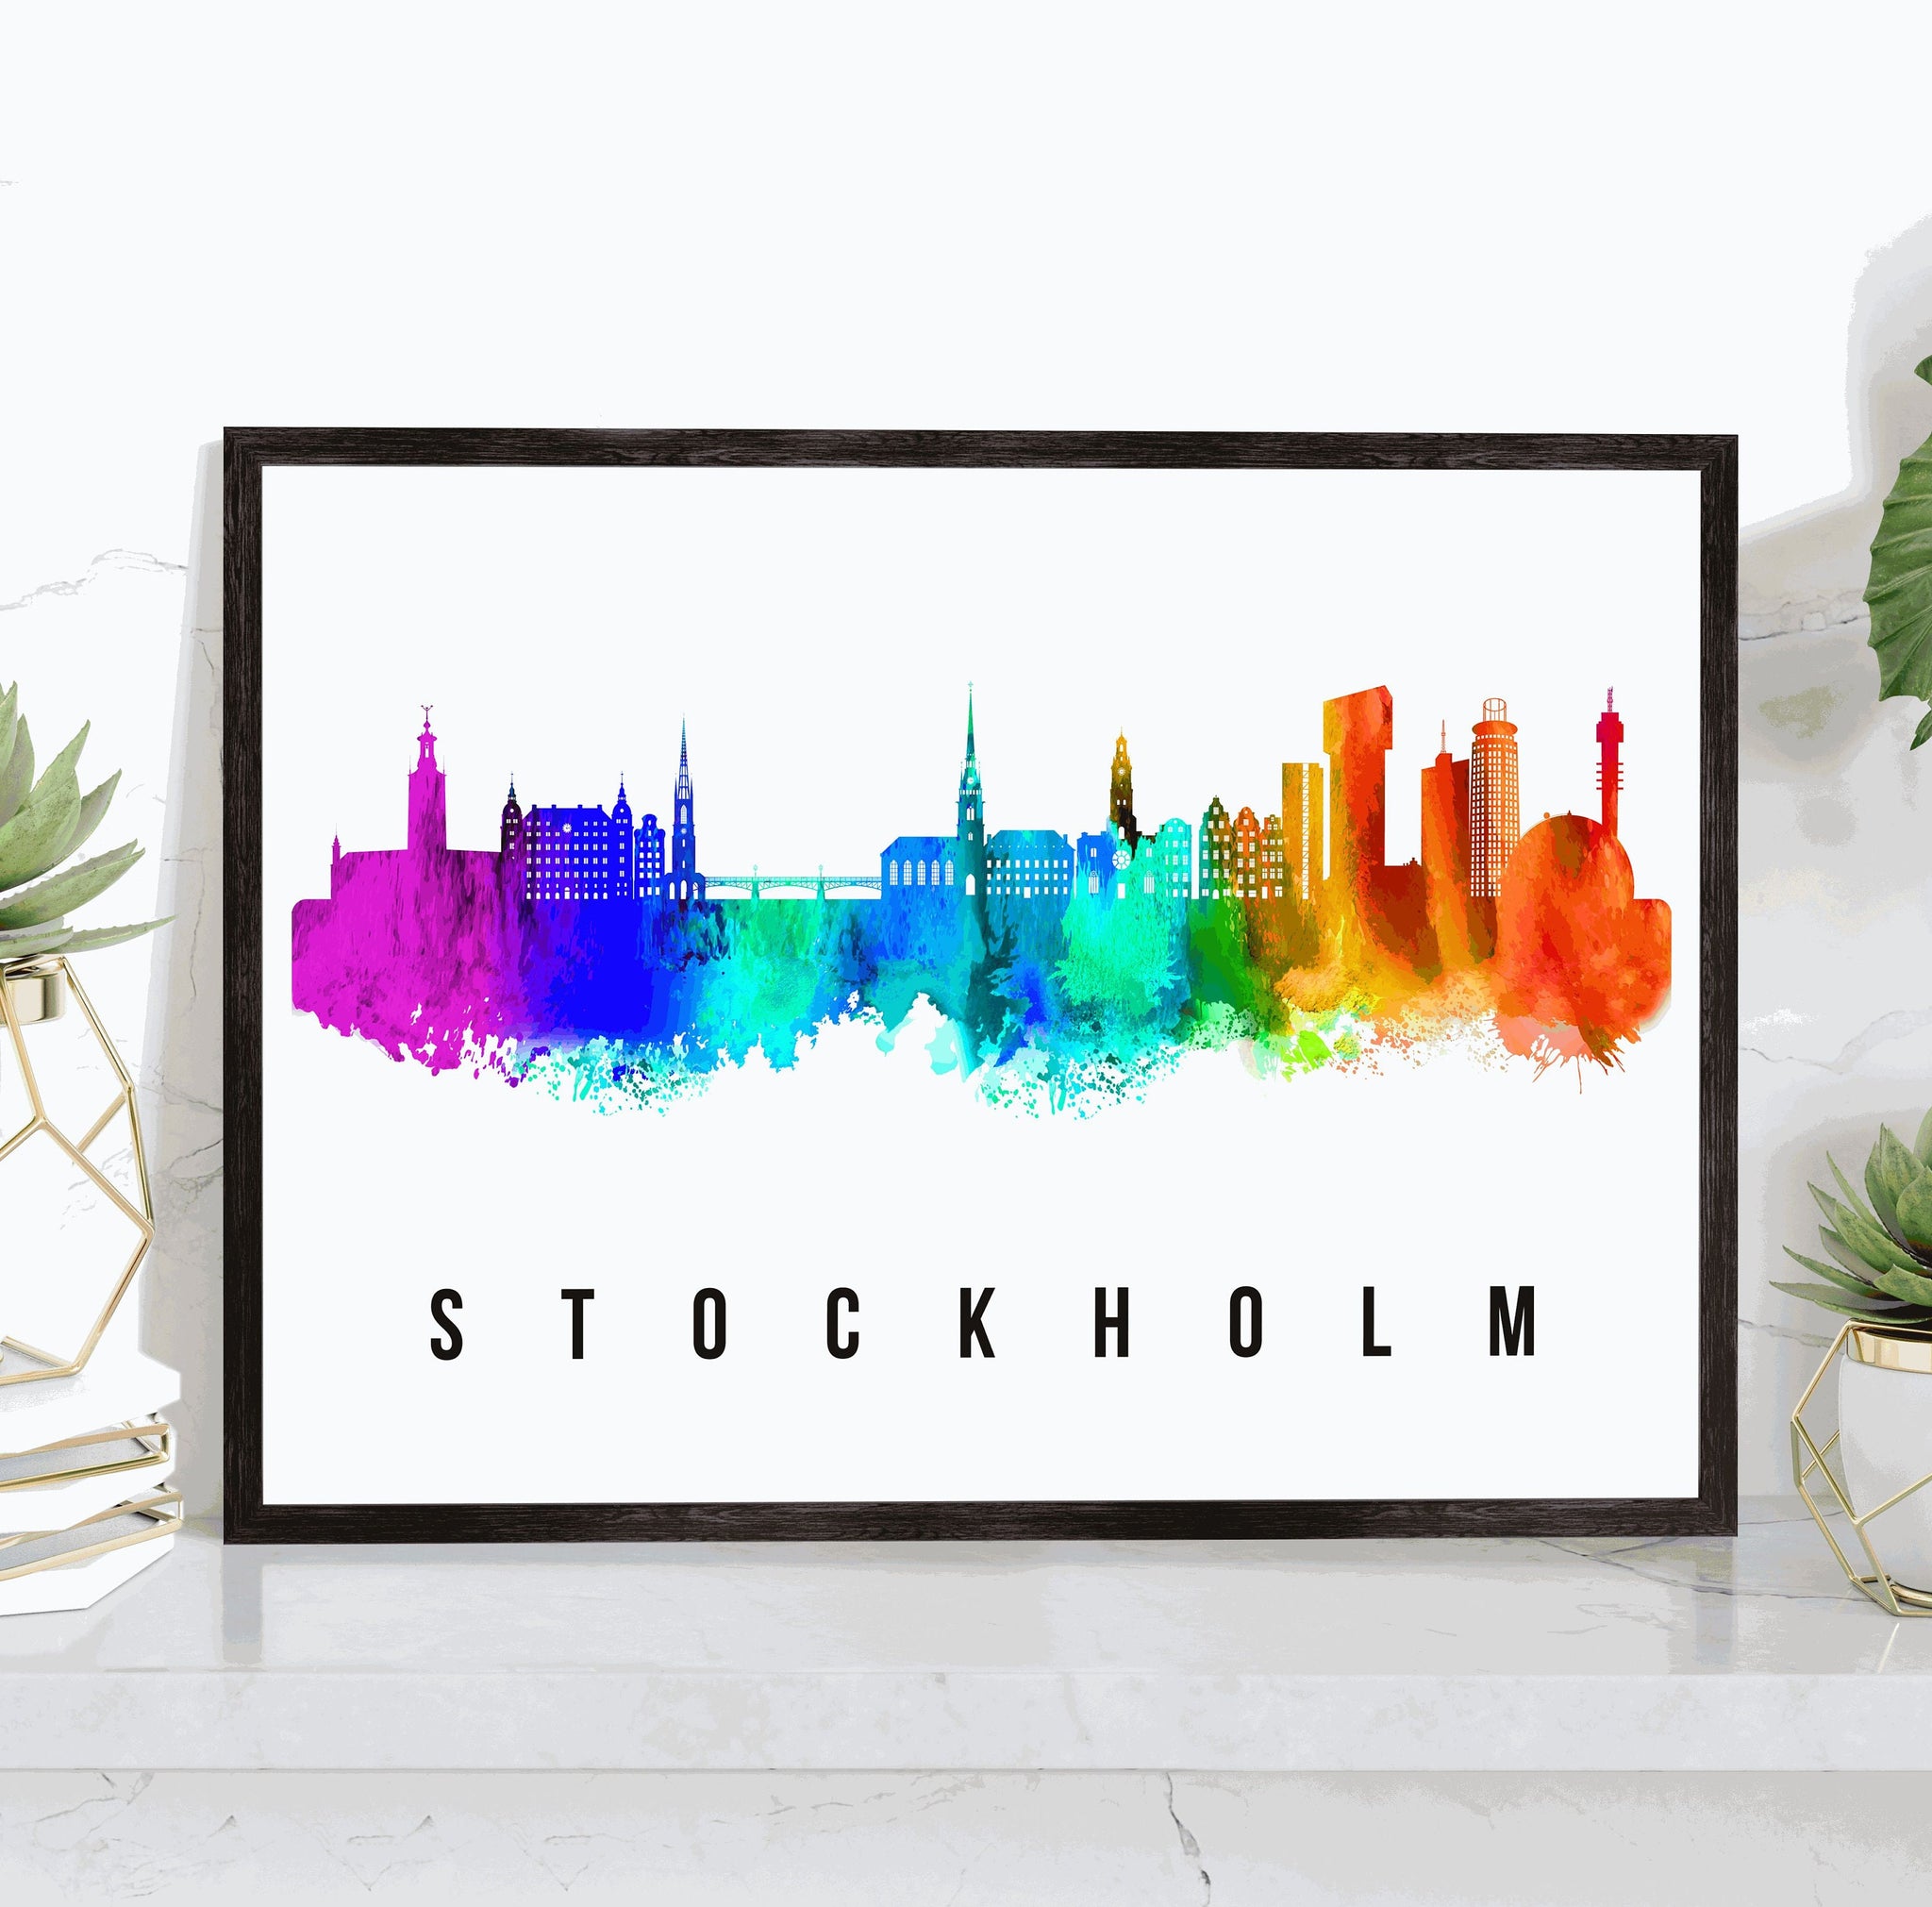 STOCKHOLM - SWEDEN Poster, Skyline Poster Cityscape and Landmark Stockholm City Illustration Home Wall Art, Office Decor